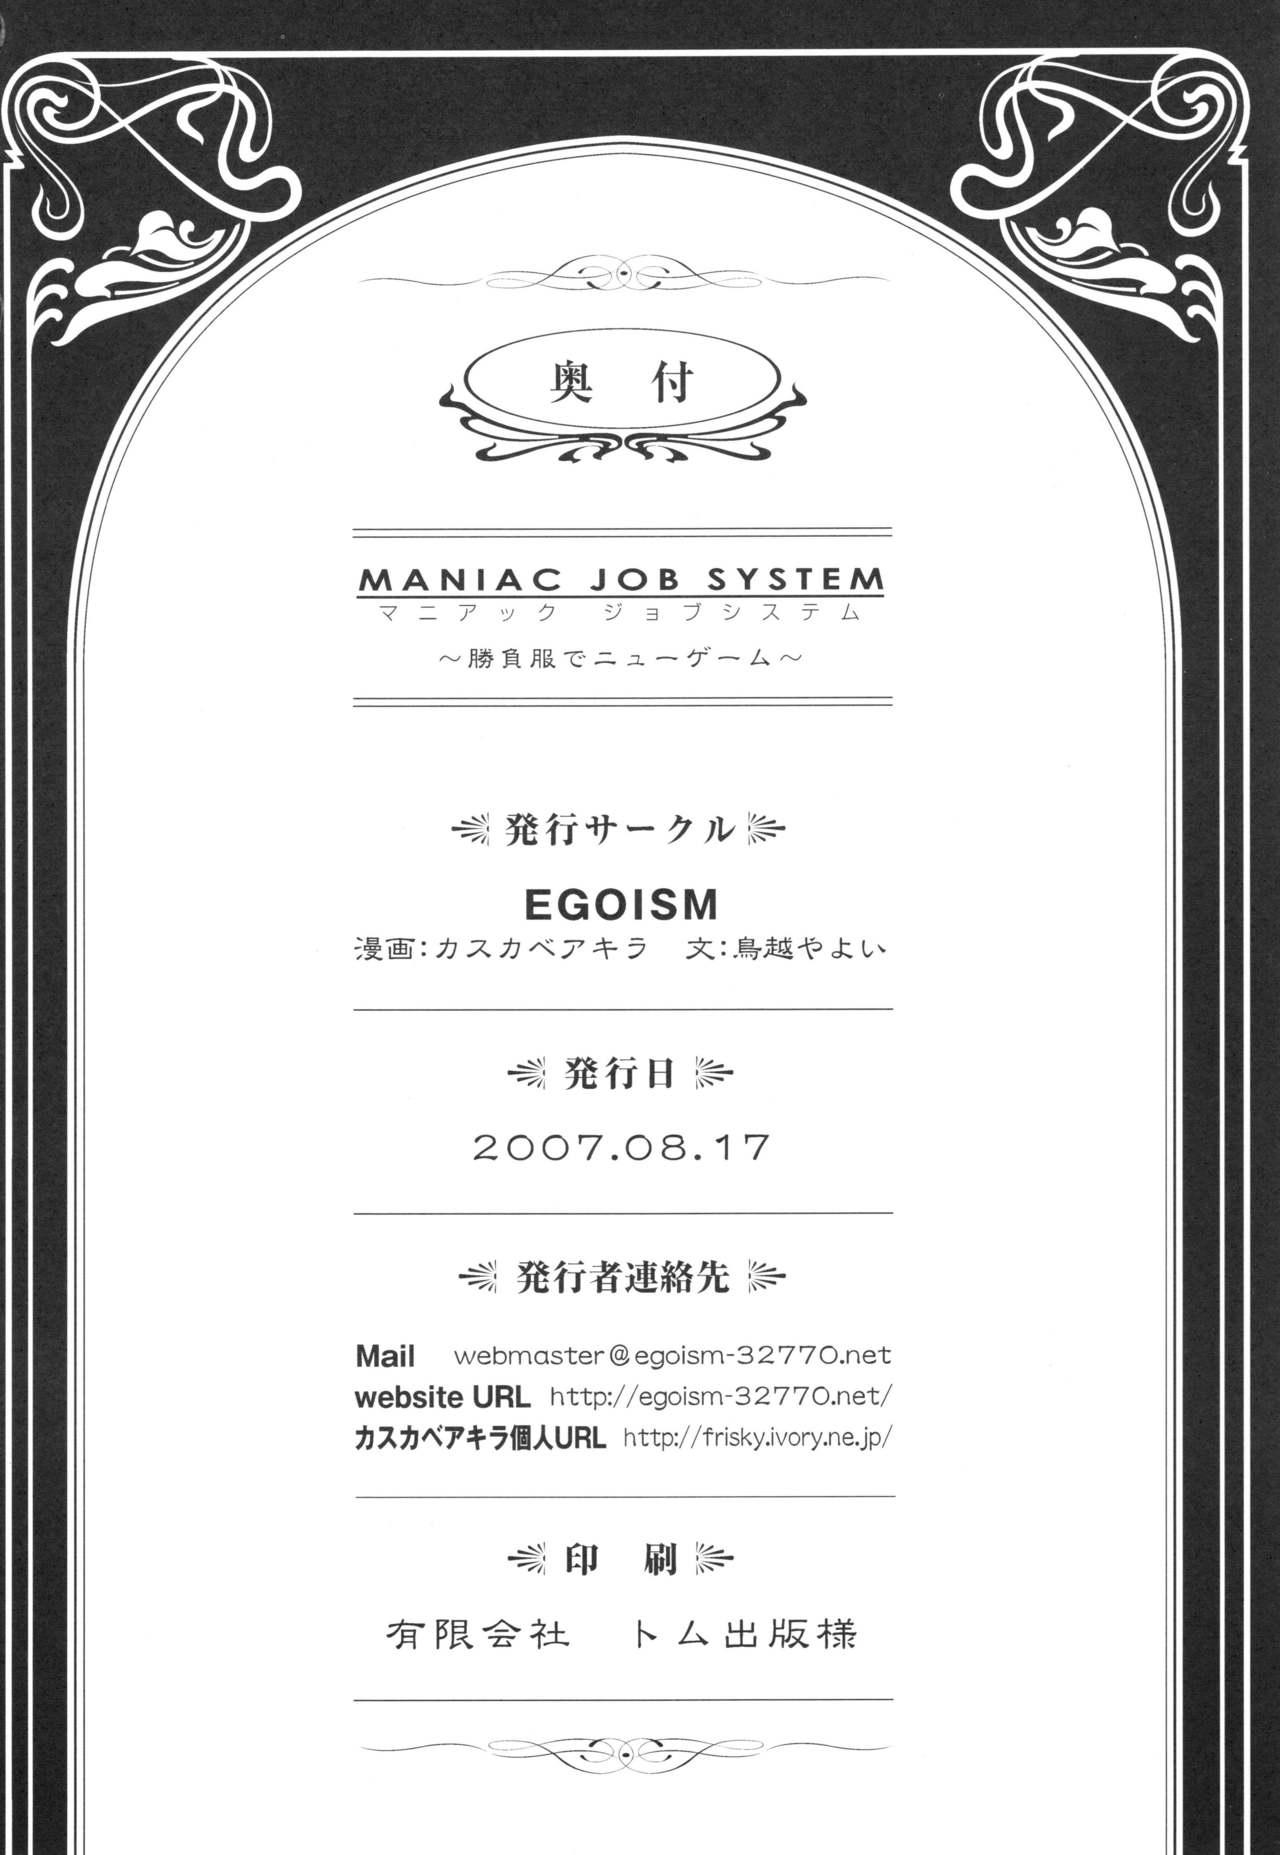 MANIAC JOB SYSTEM 24